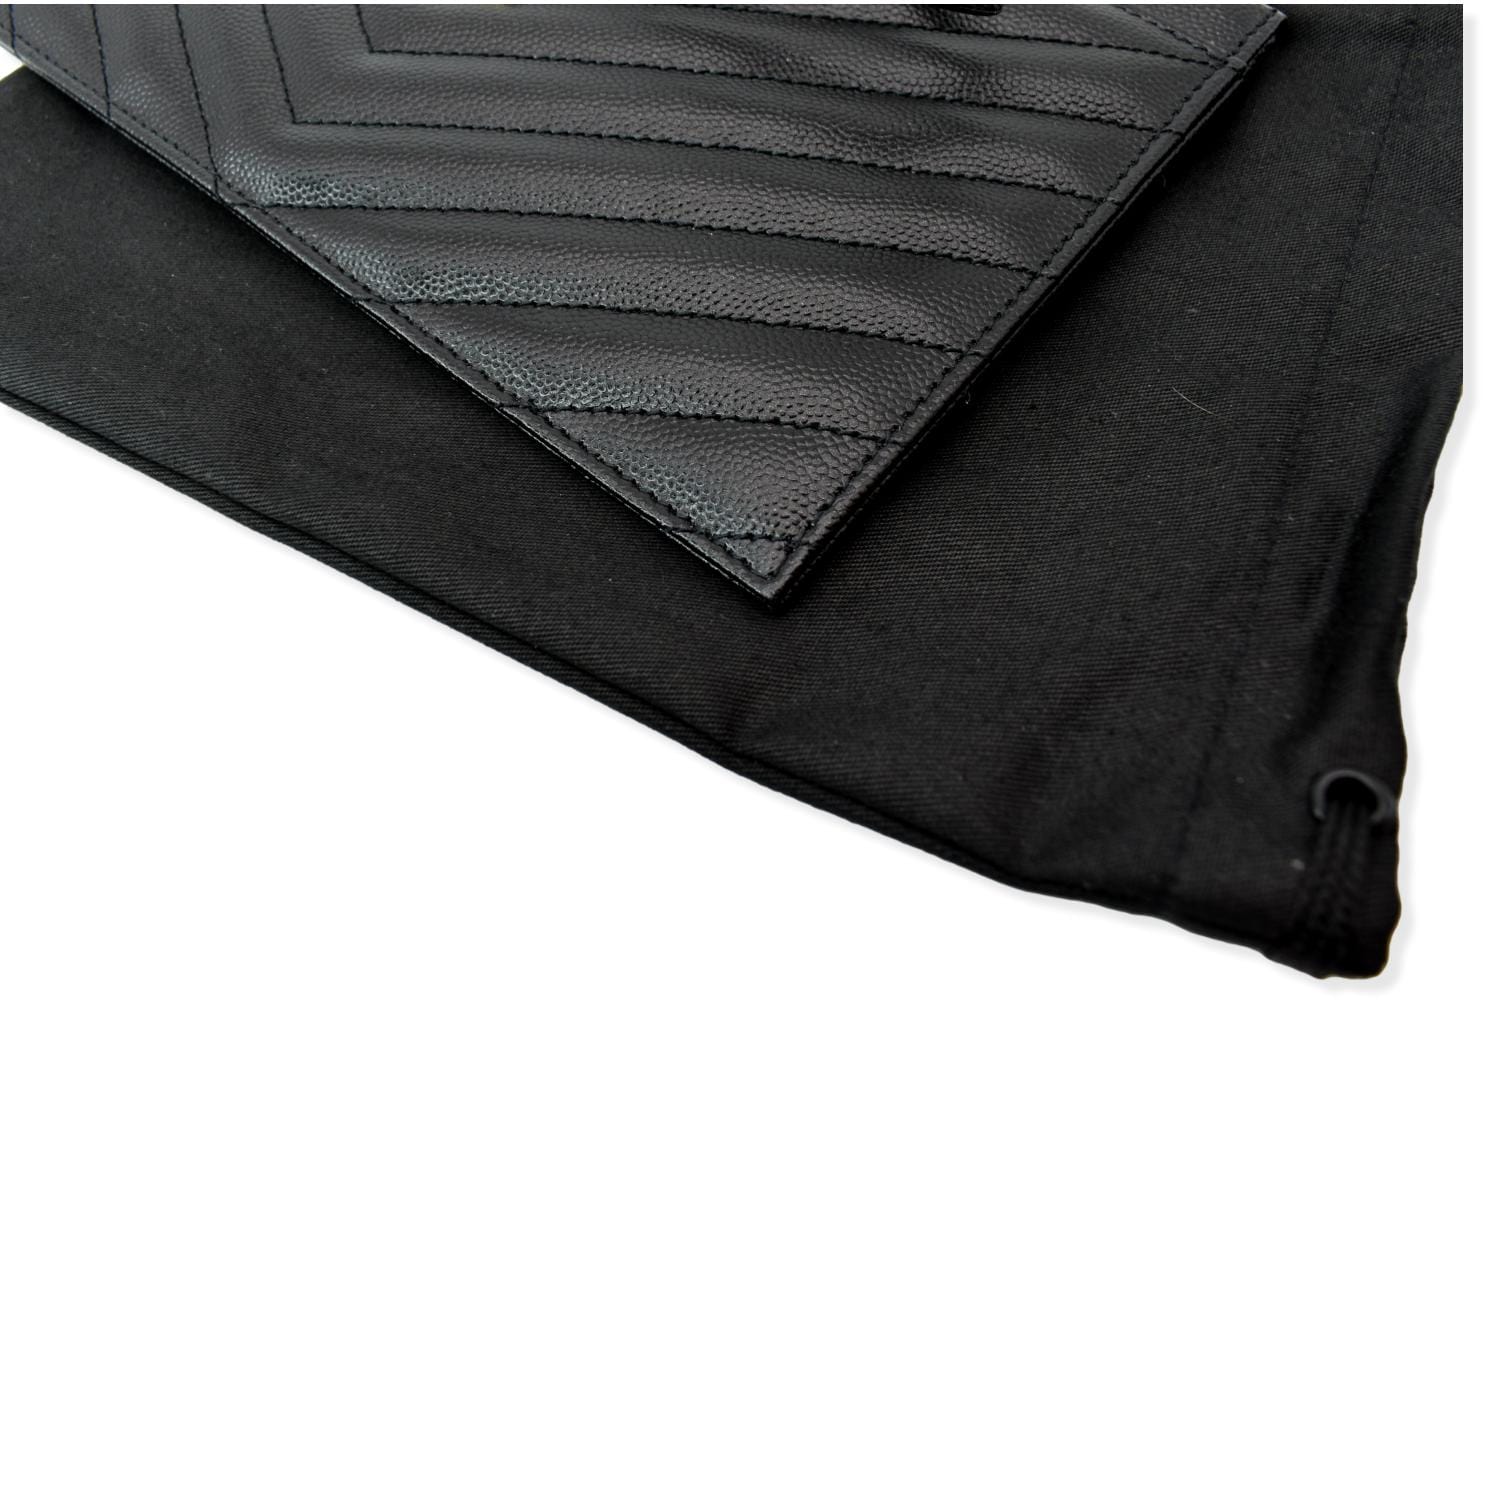 Yves Saint Laurent Vintage - Monogram Bill Pouch - Black - Leather Handbag  - Luxury High Quality - Avvenice